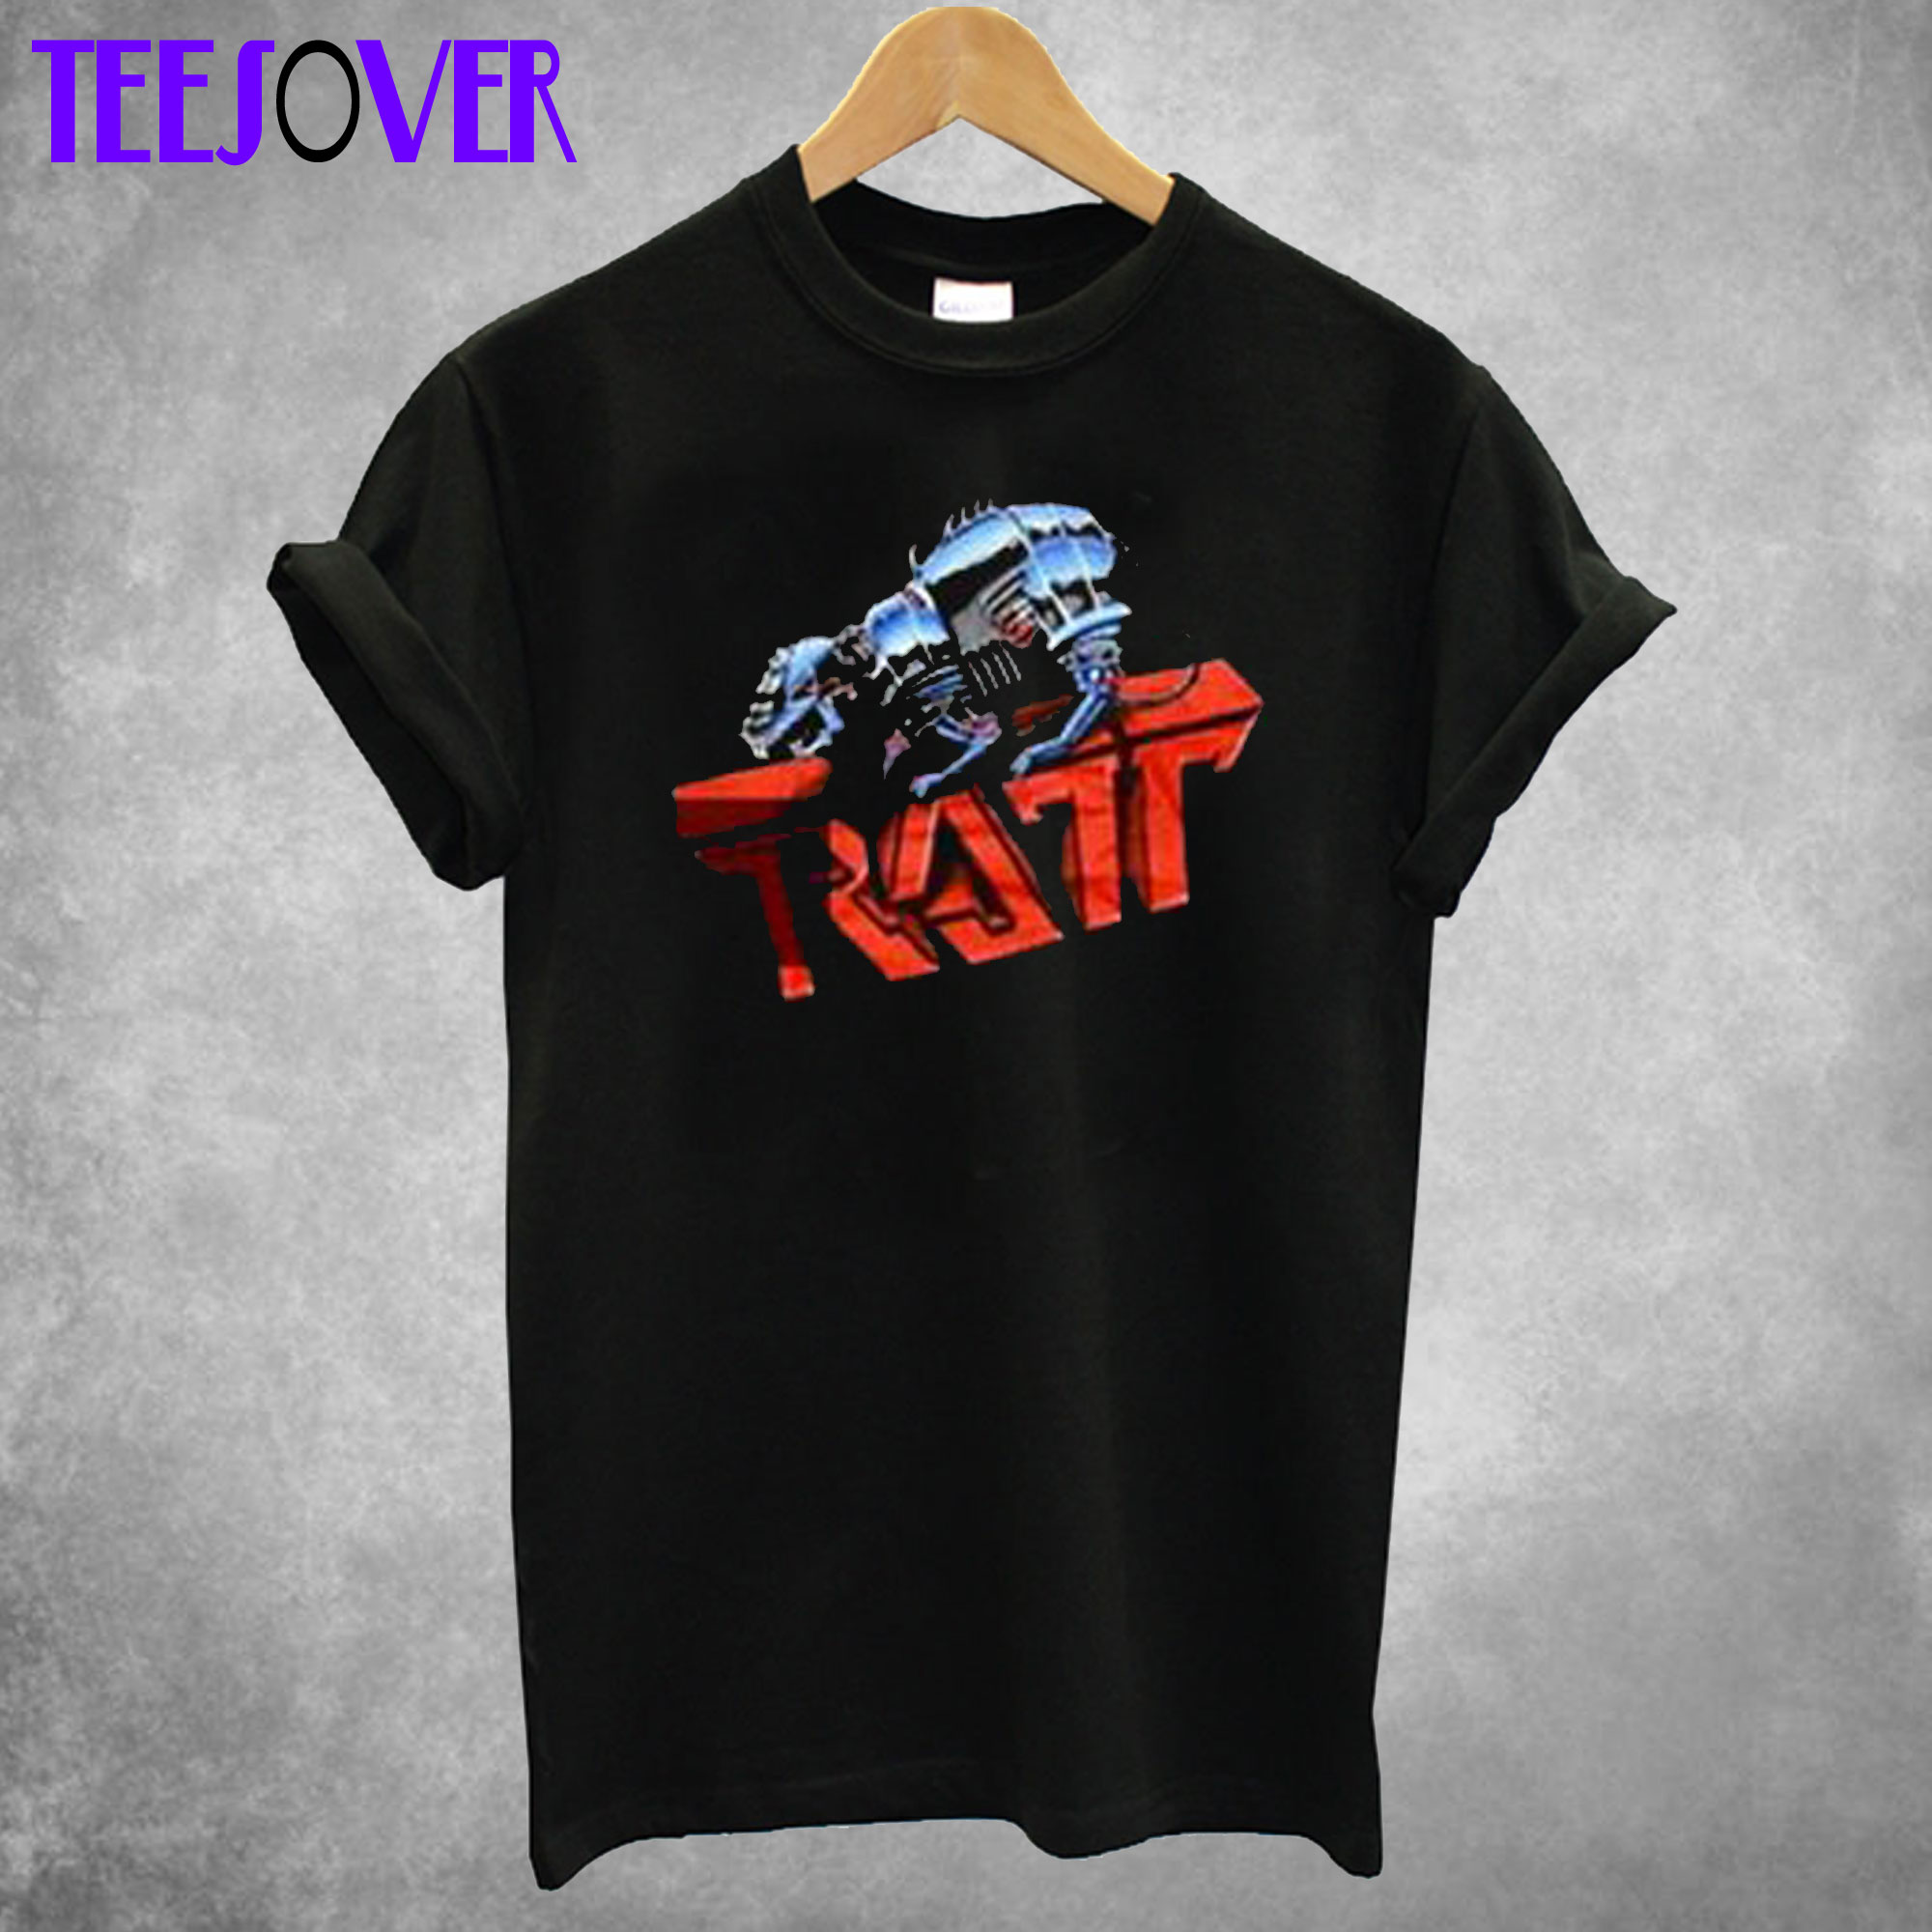 Vintage 1983 Ratt T shirt